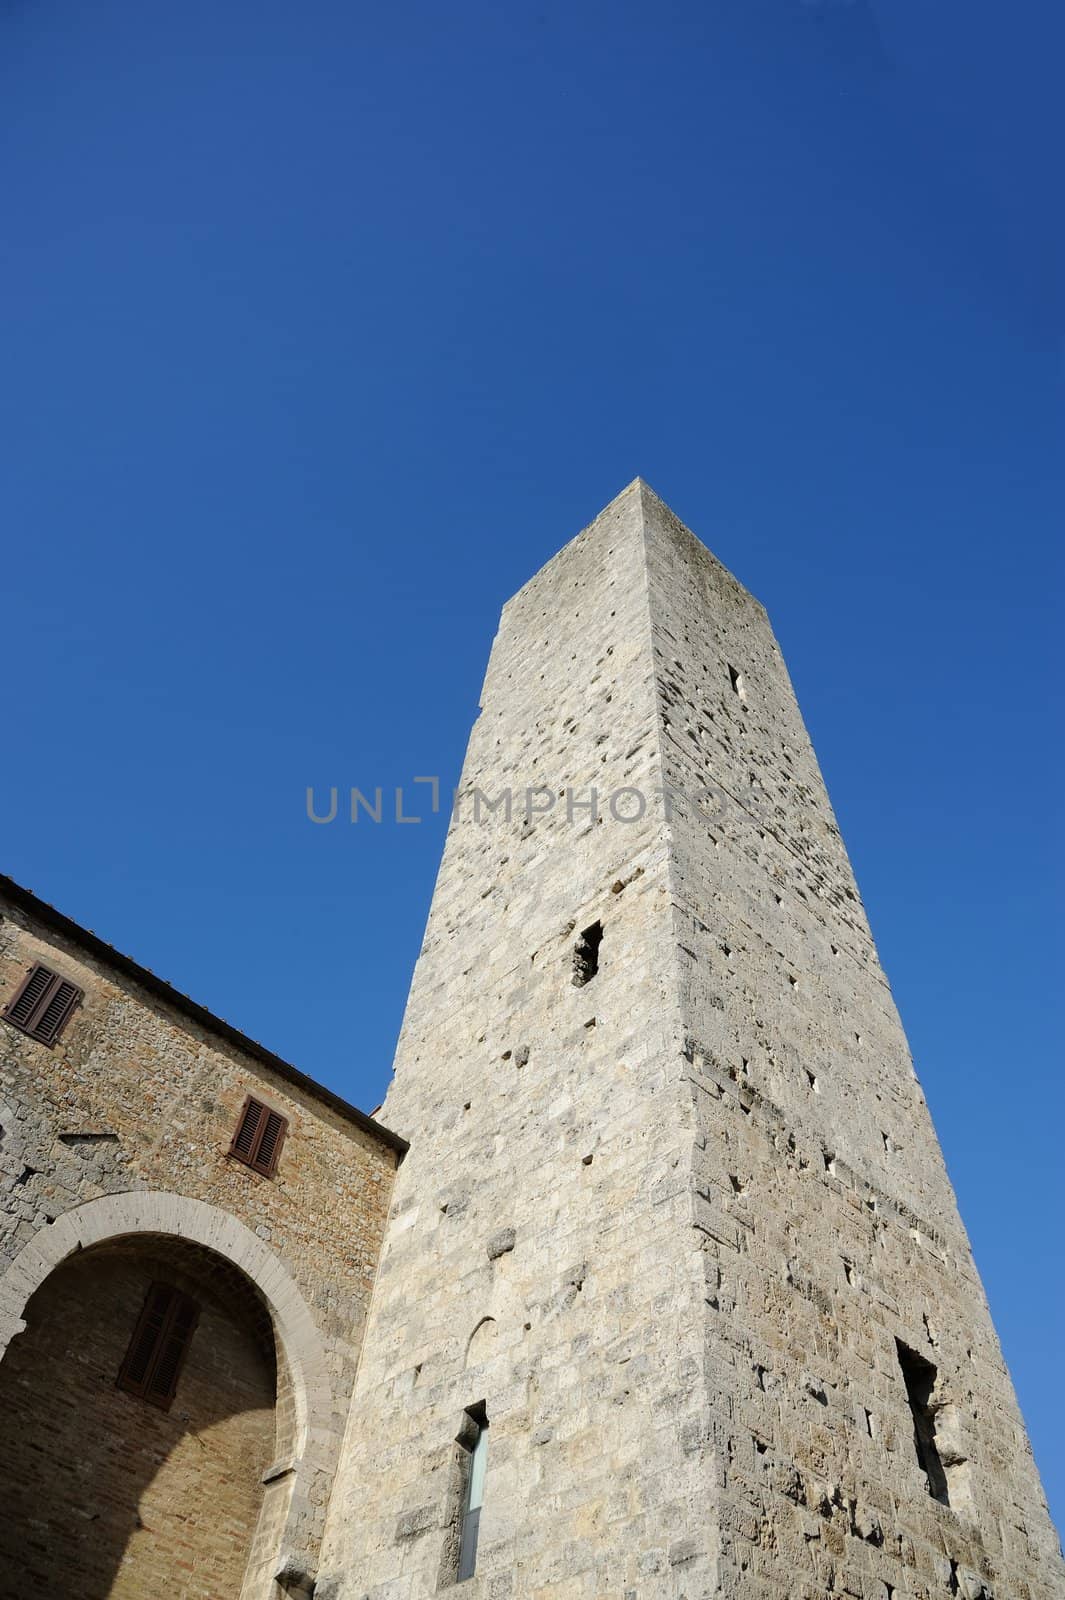 San Gimignano is the city of beautiful towers, landmark of Tuscany, Italy